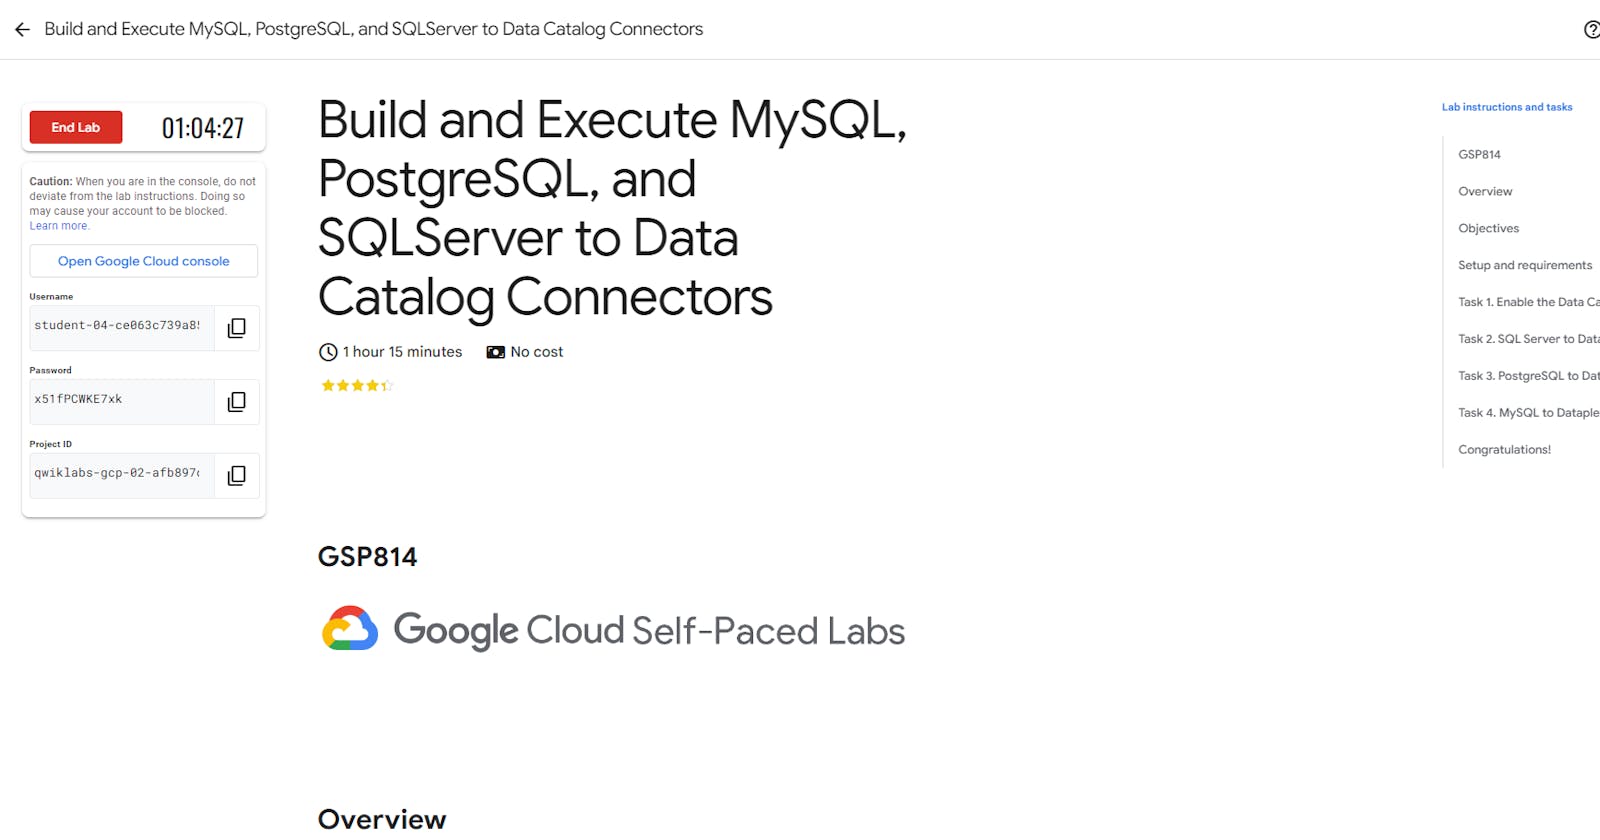 Build and Execute MySQL, PostgreSQL, and SQLServer to Data Catalog Connectors - GSP814